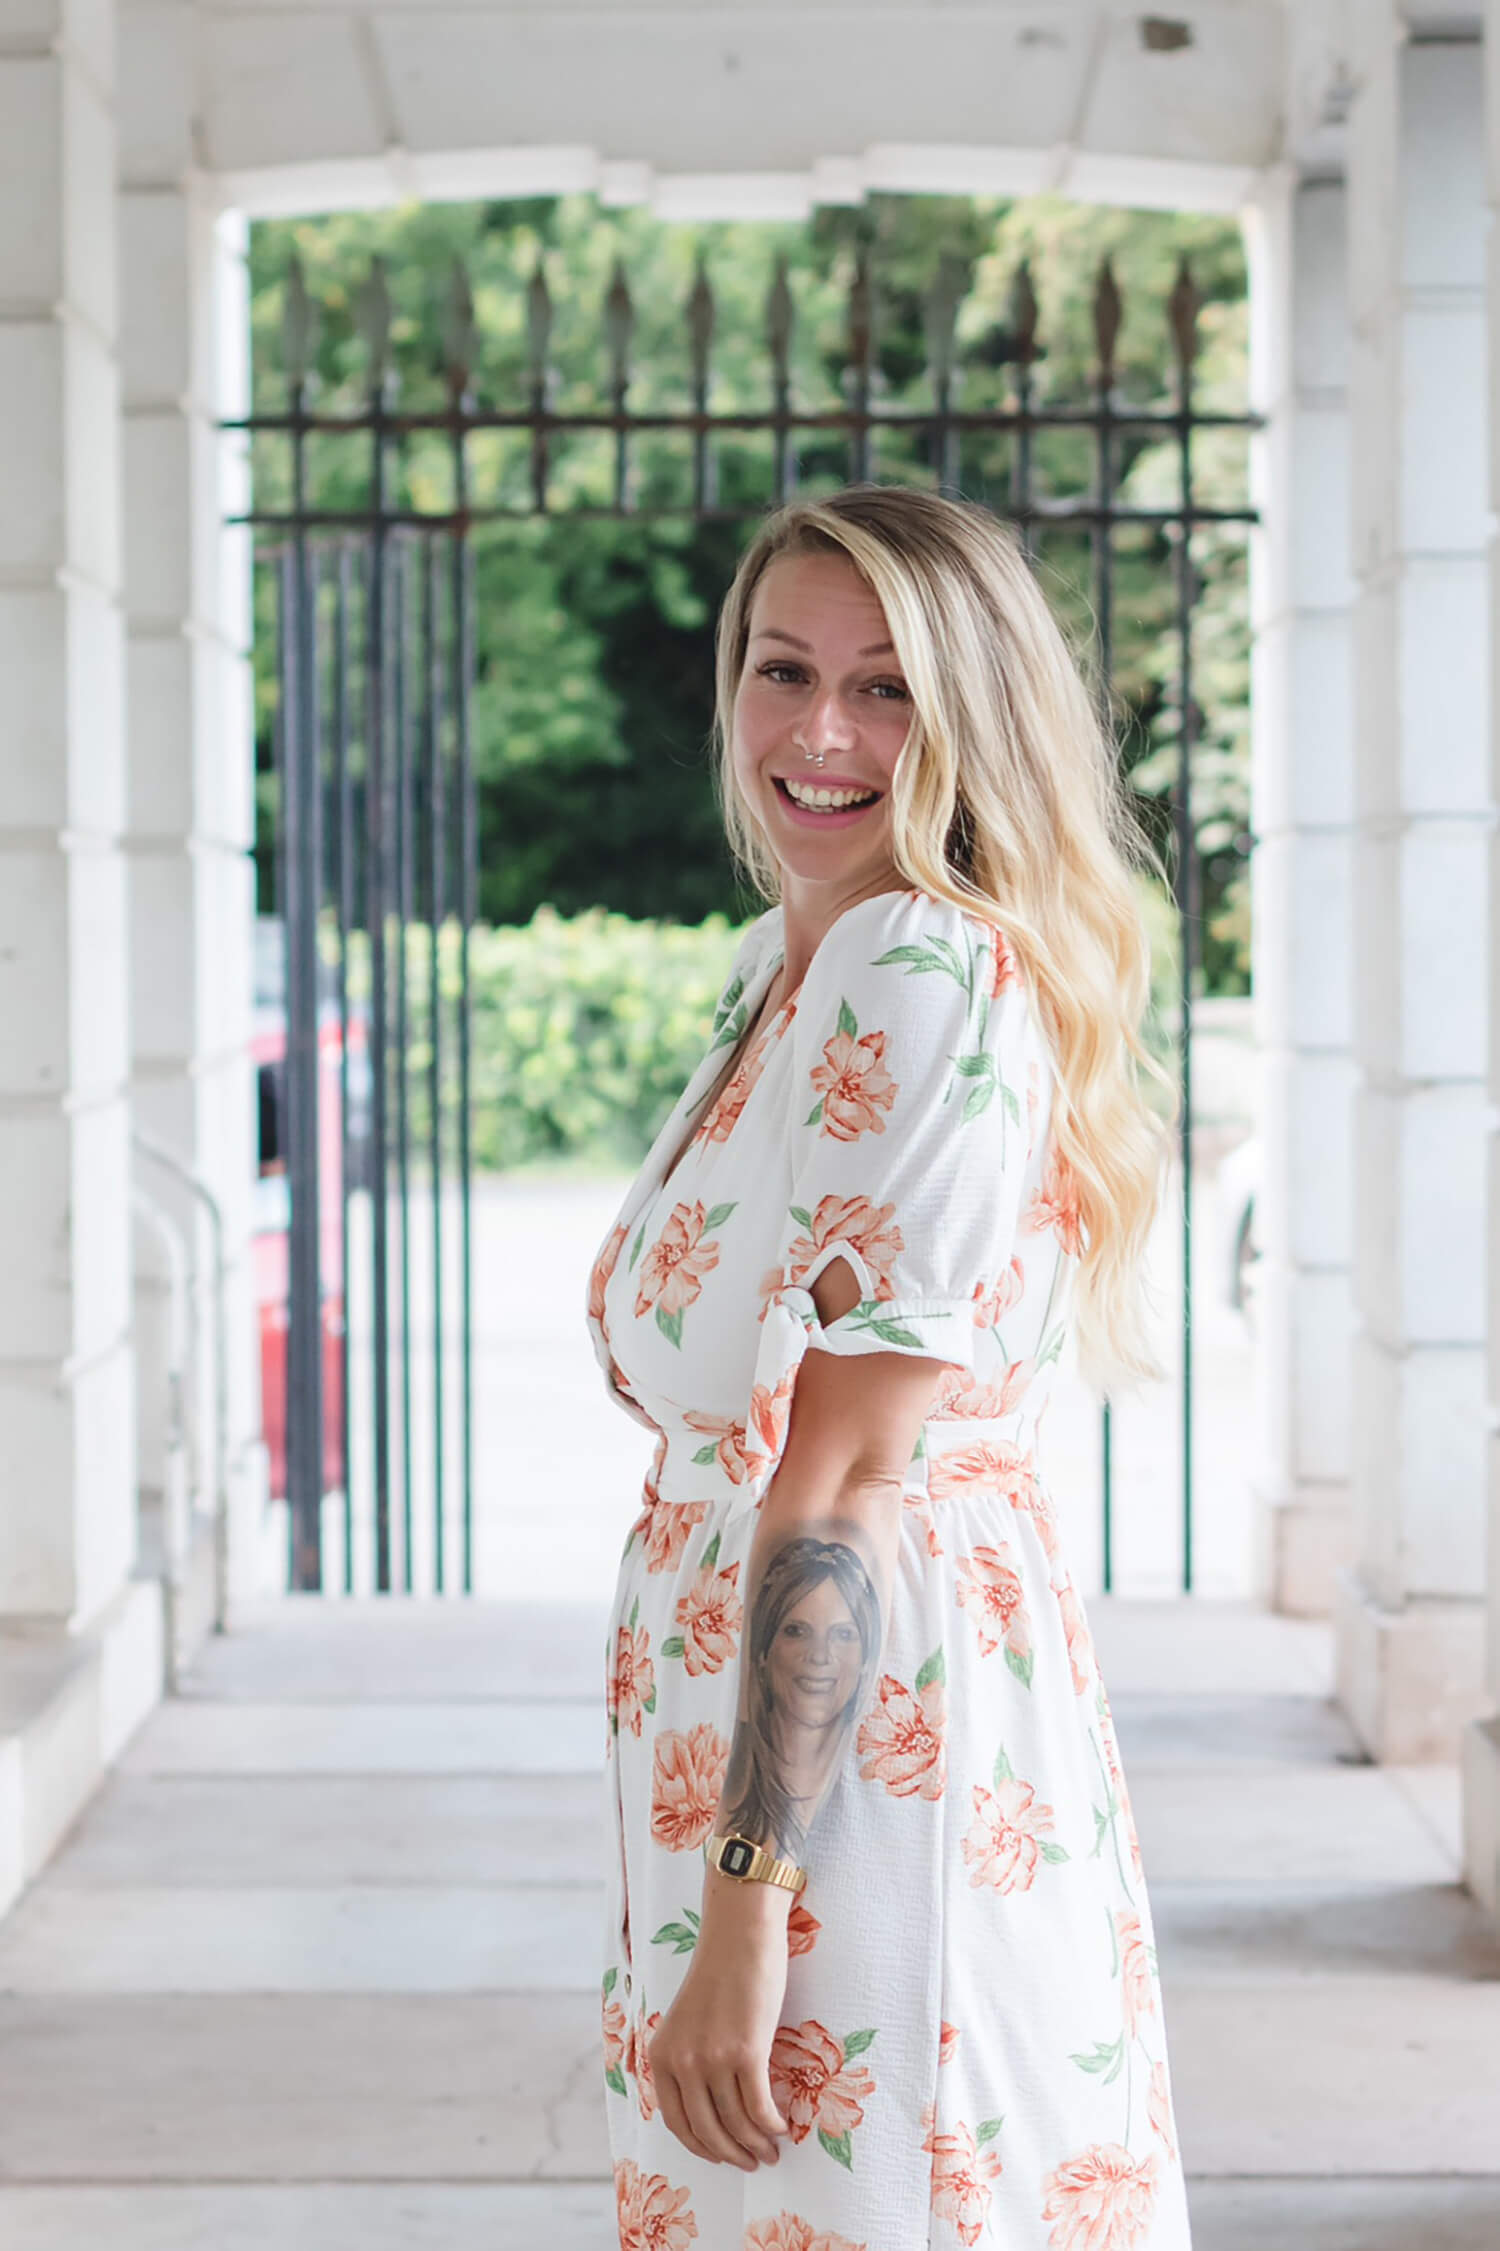 Danielle, founder of Wild Rising Skincare, smiling in summer dress